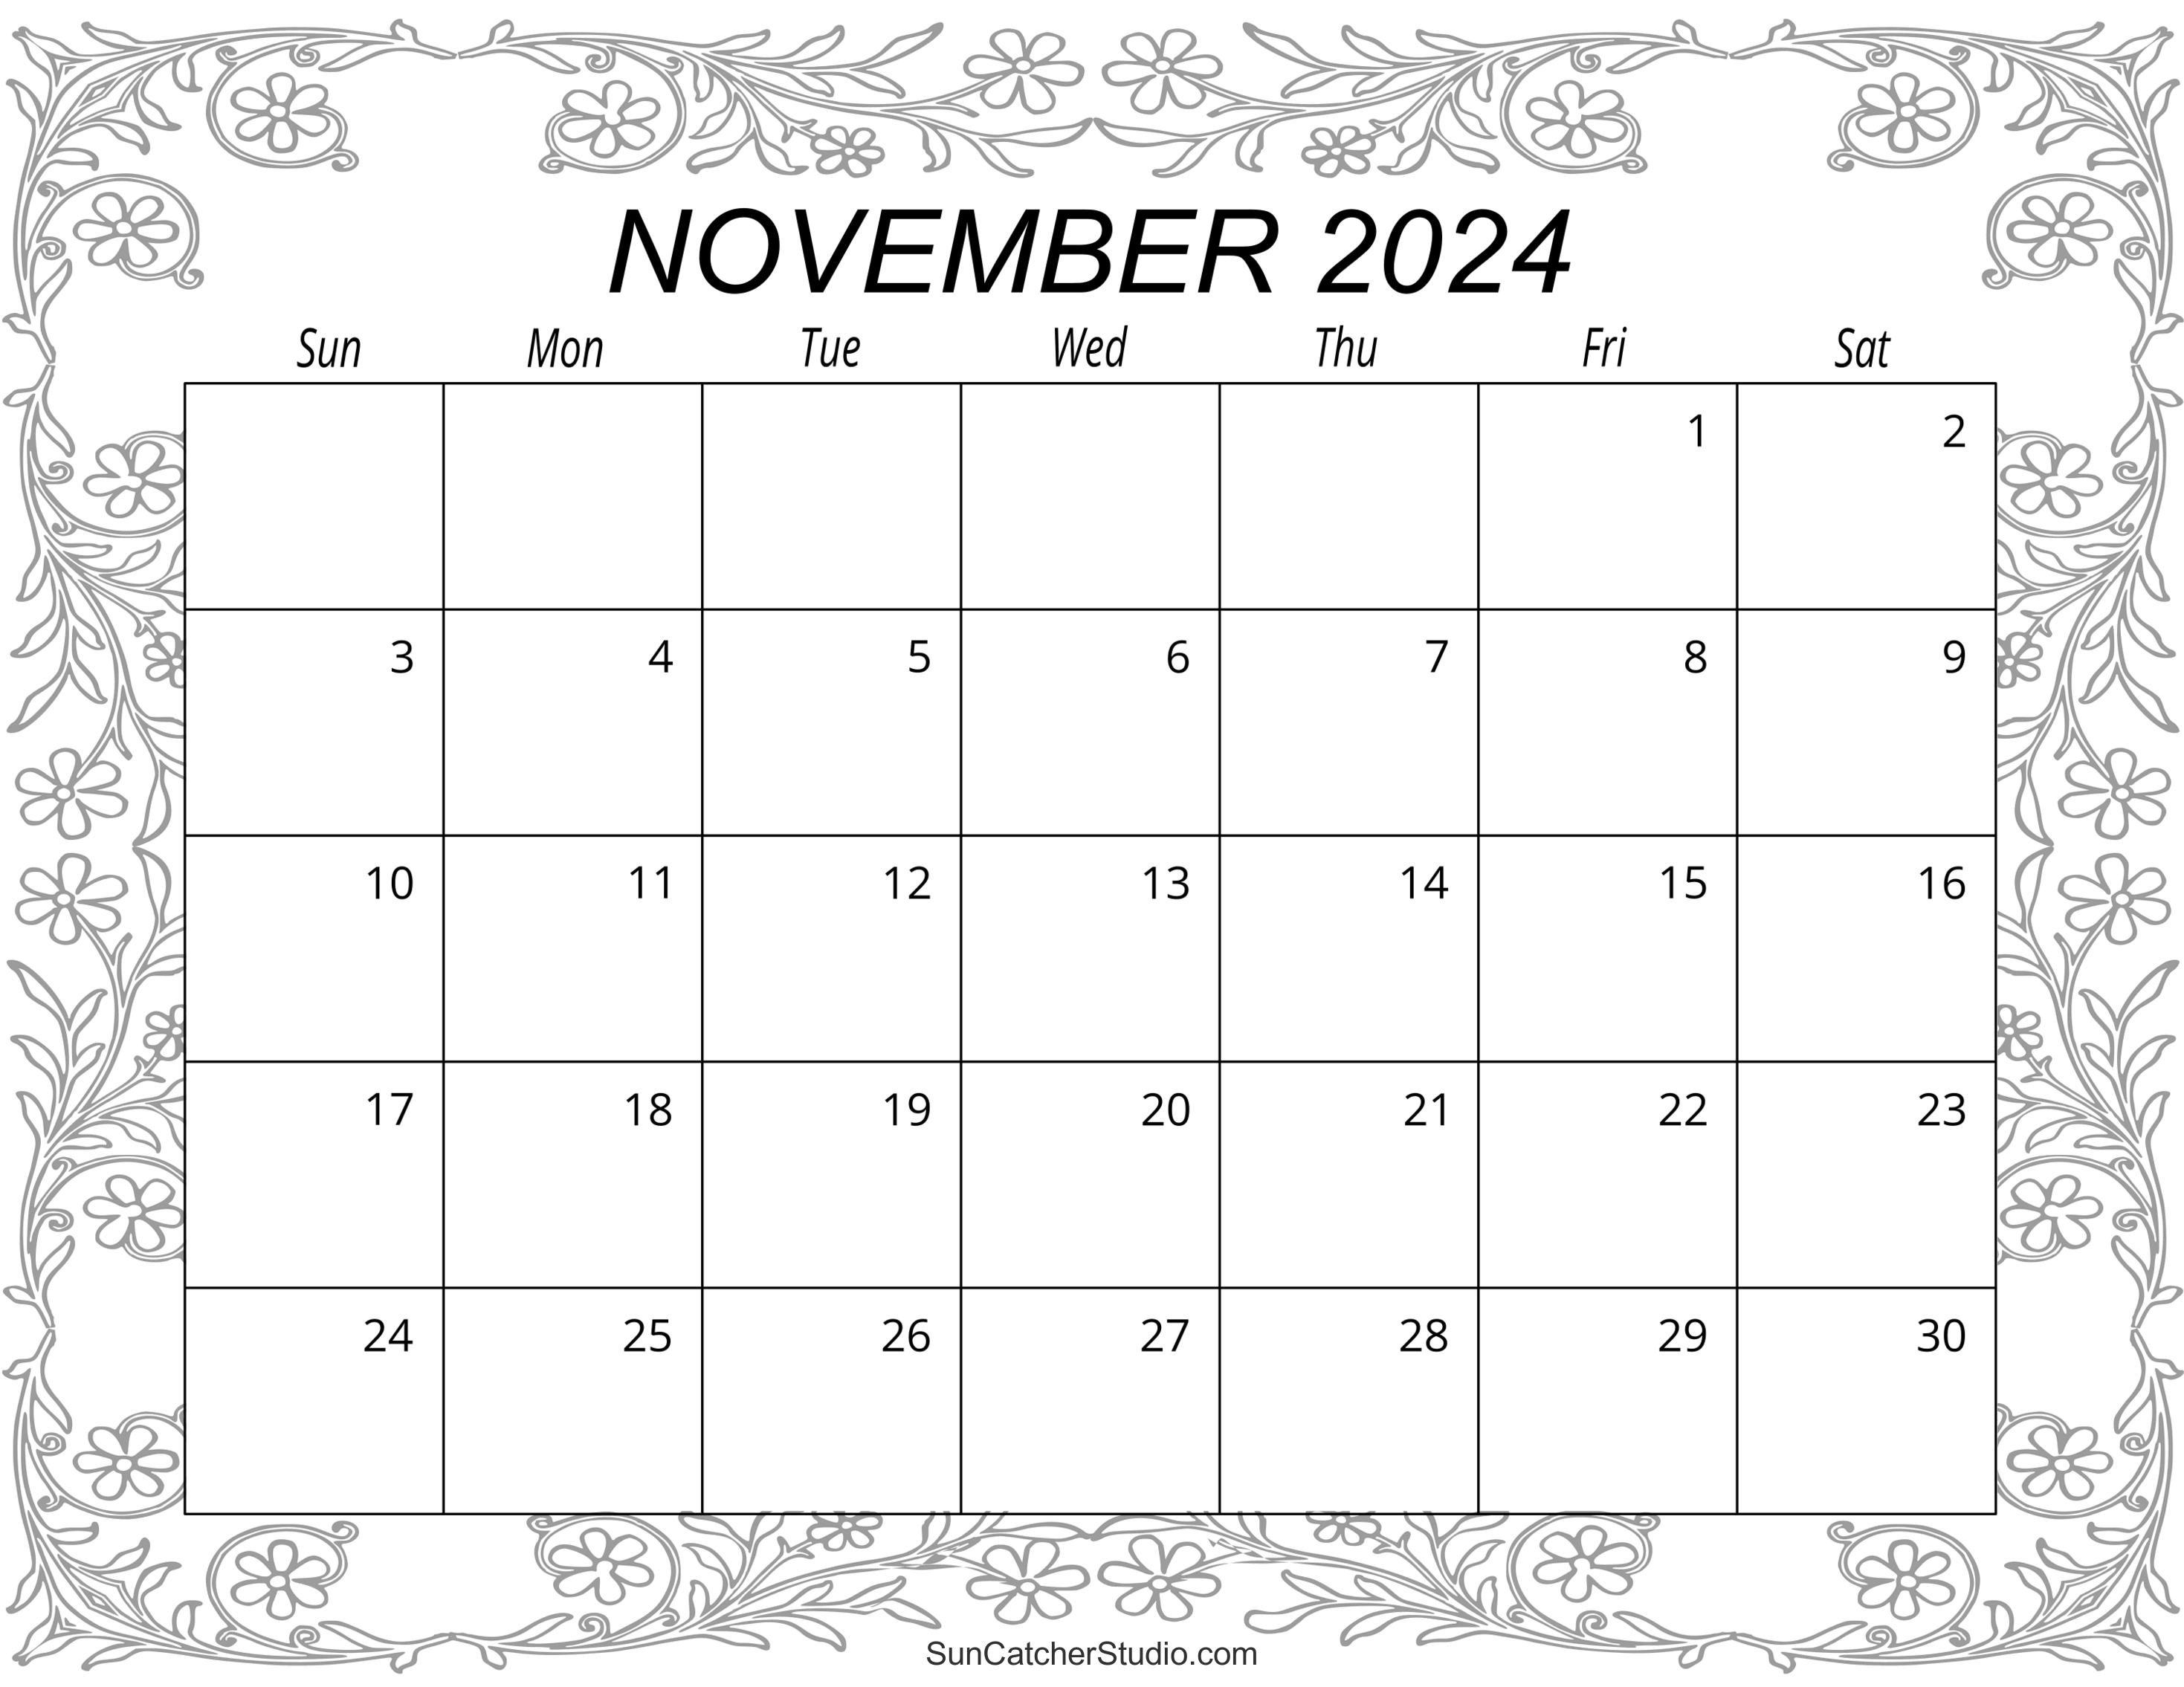 november-2024-calendar-free-printable-diy-projects-patterns-monograms-designs-templates